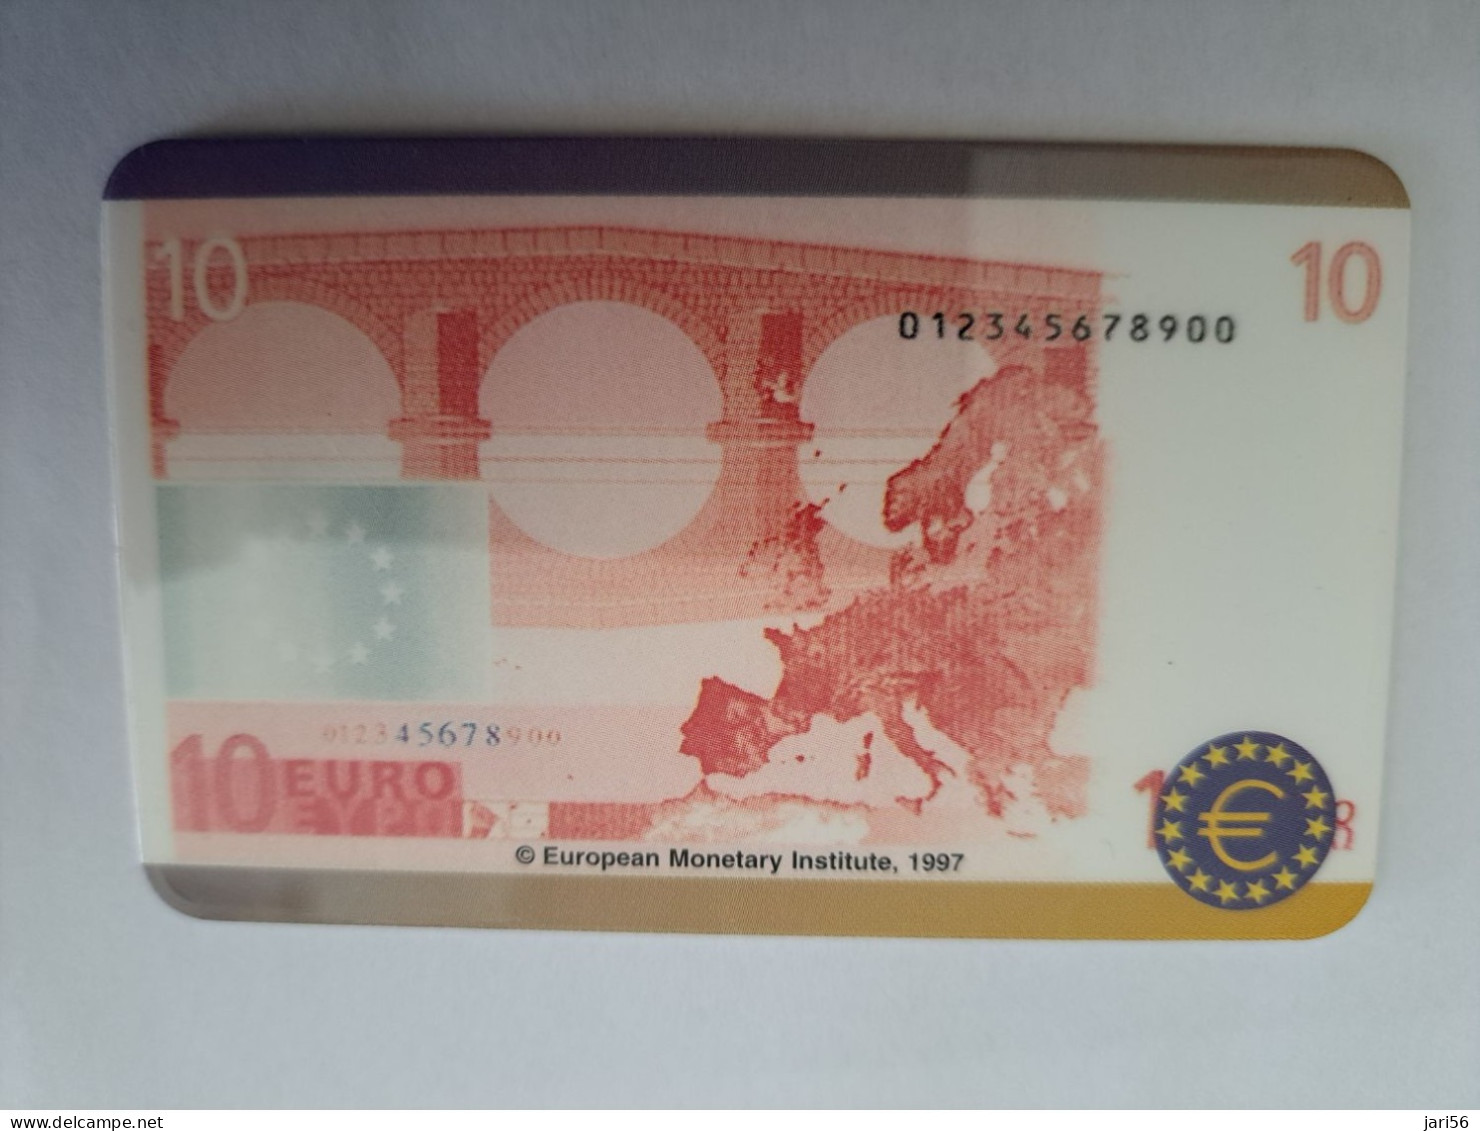 GREAT BRITAIN   20 UNITS   / EURO COINS/ BILJET 10  EURO    (date 08/98)  PREPAID CARD / MINT      **13313** - [10] Colecciones